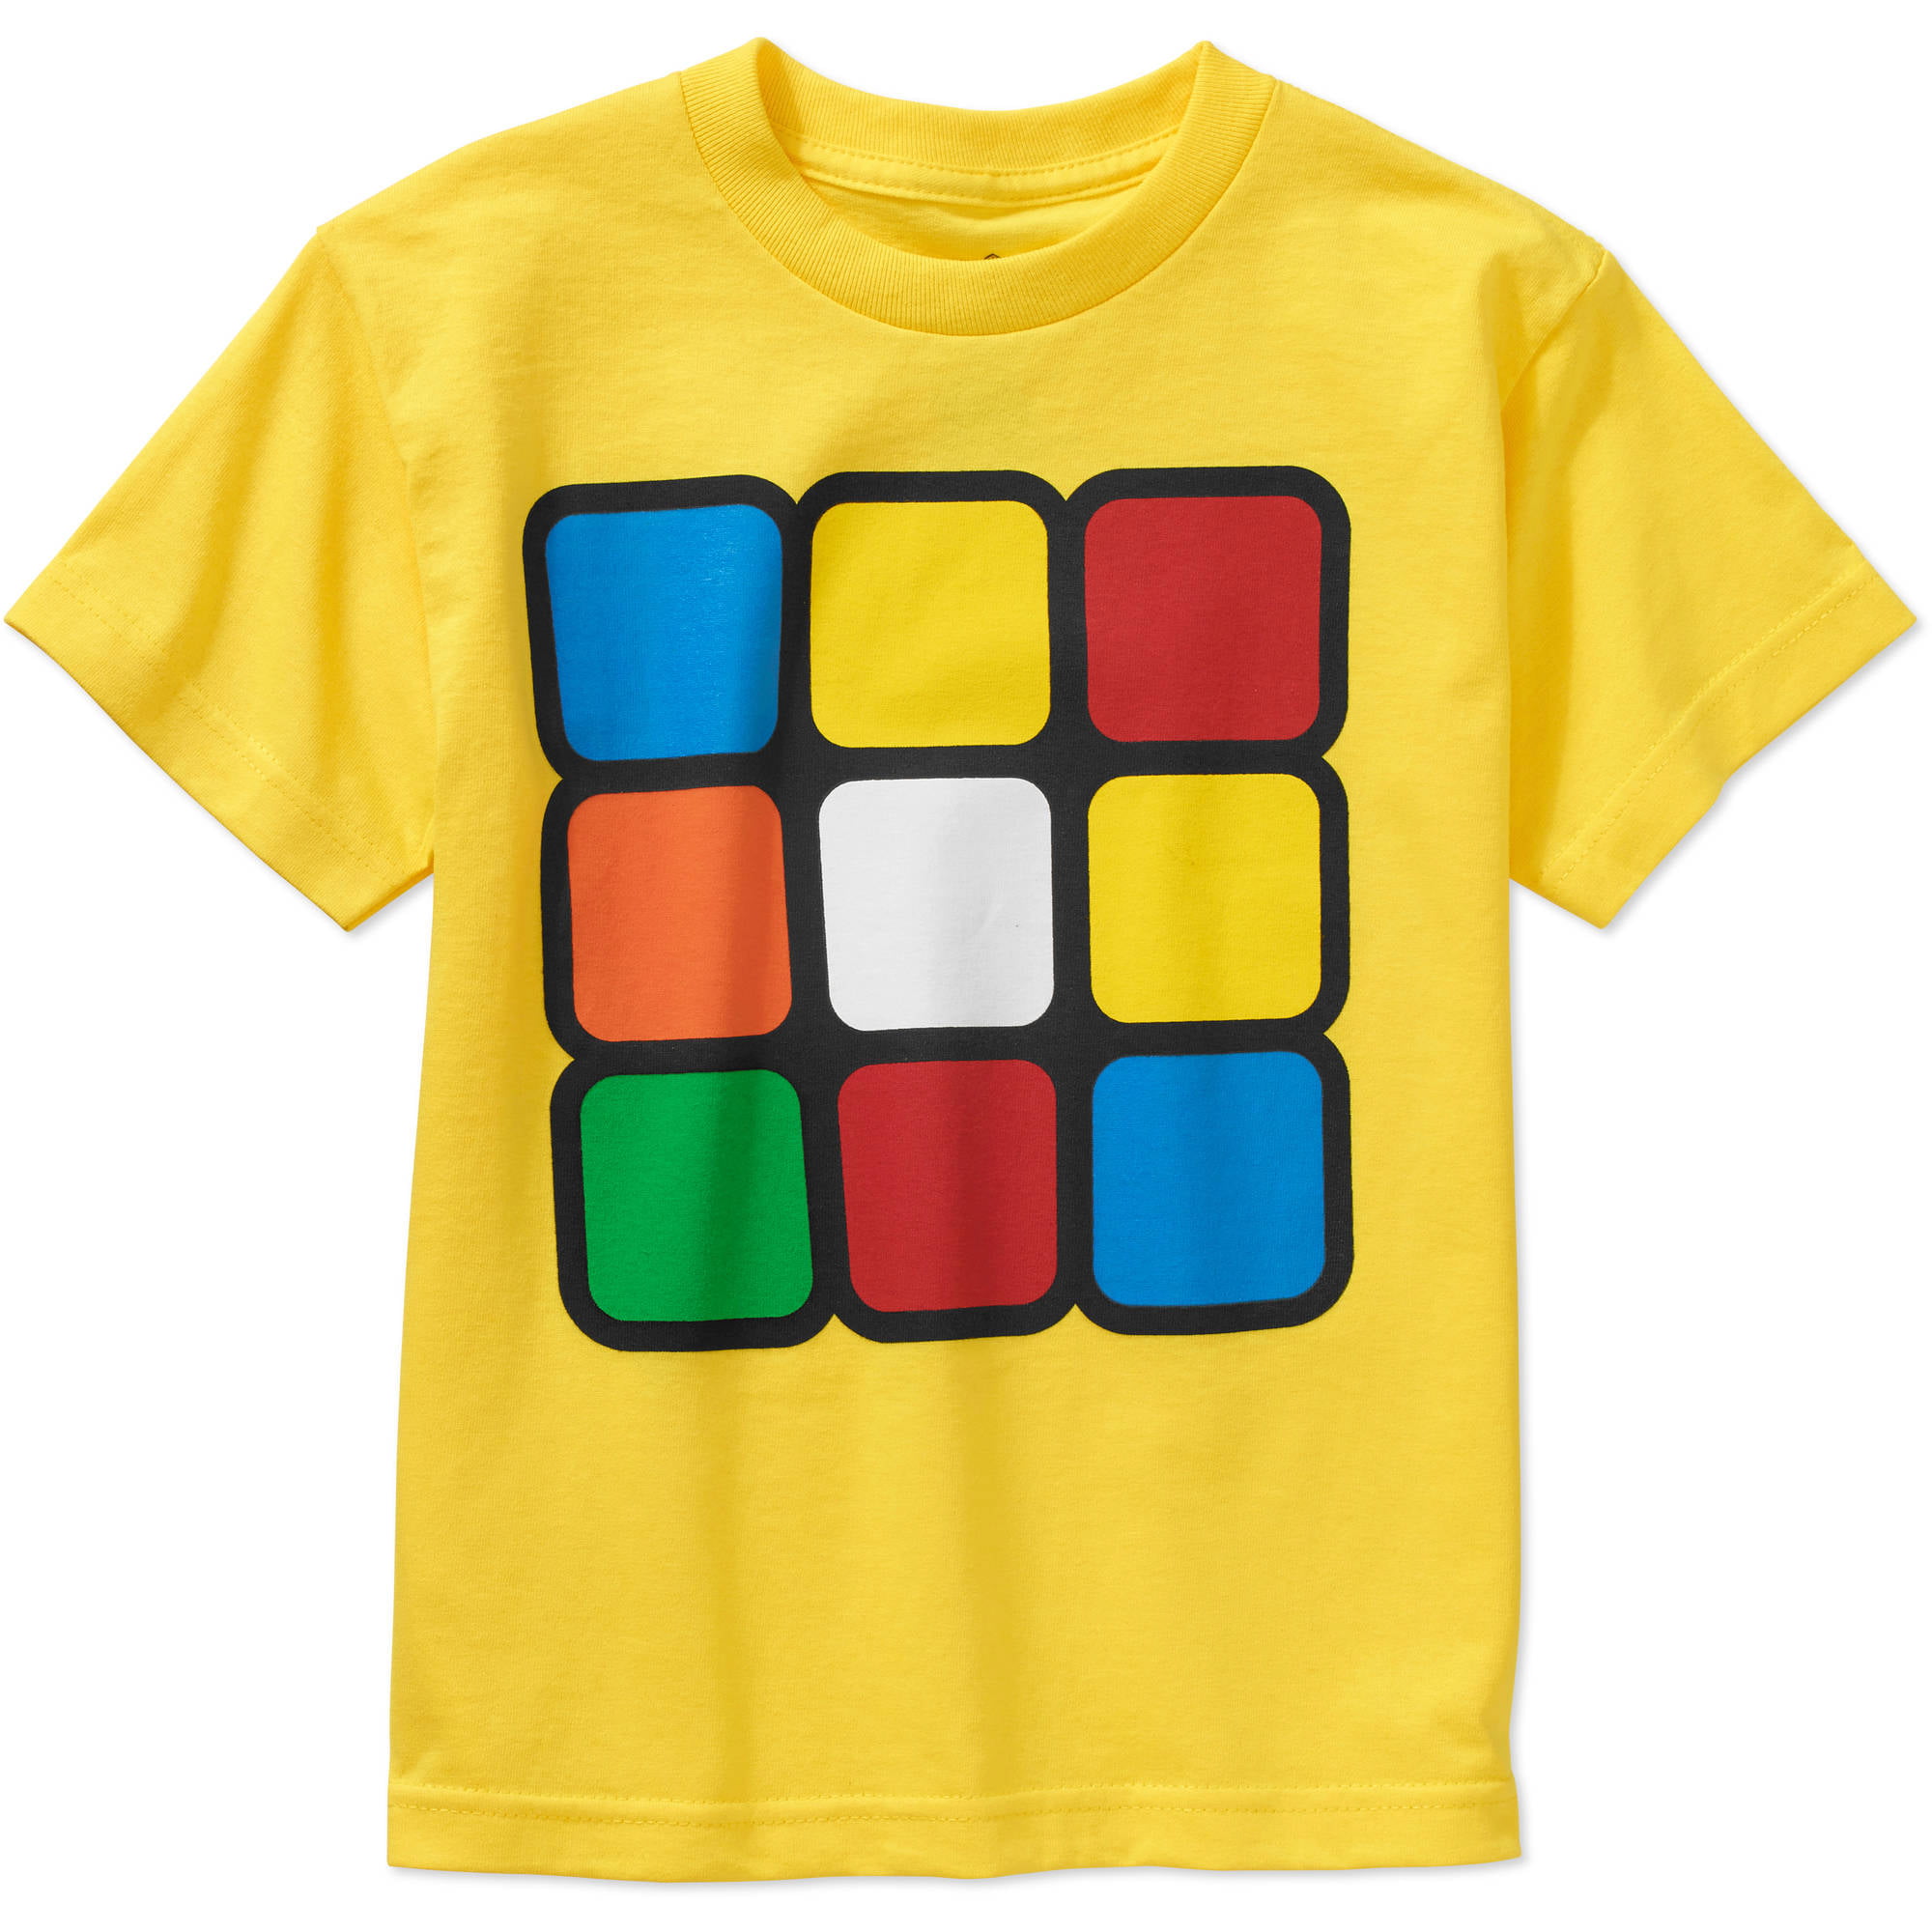 Rubix Cube Retro Game Tank Tops & Tee T Shirts